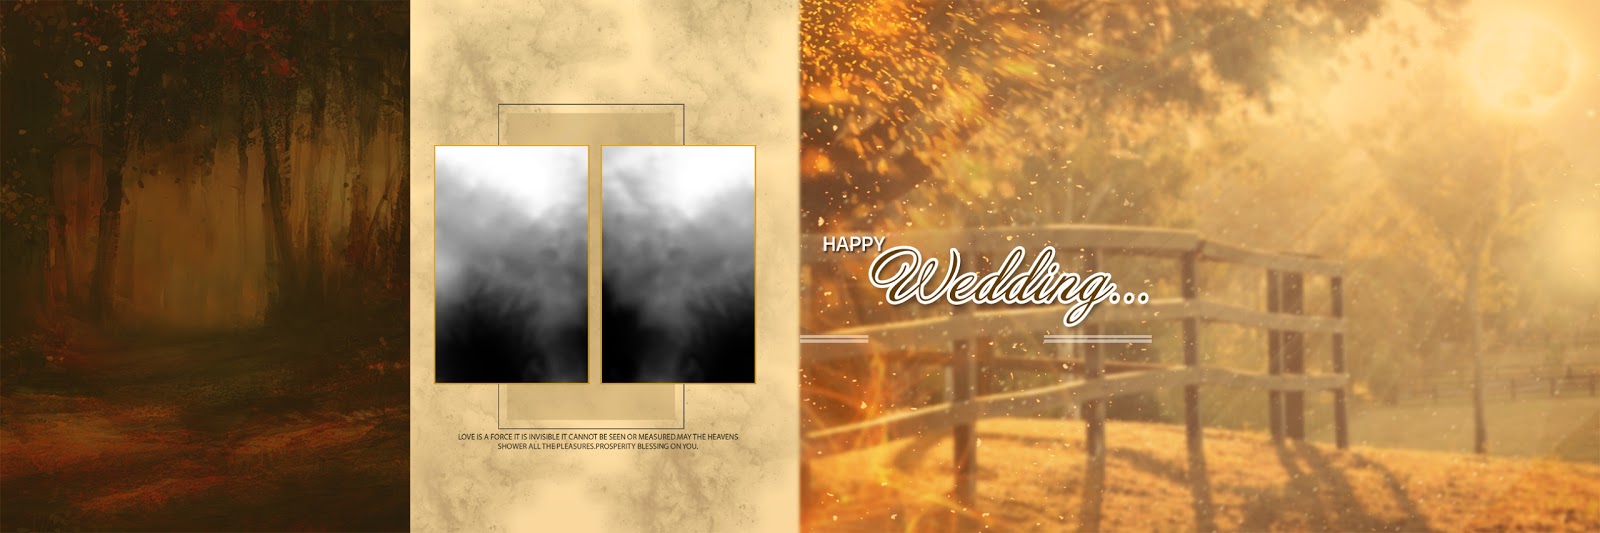 PSD WEDDING PHOTO ALBUM DESIGN TEMPLATES: Photoshop background (PSD FILE)  download SIZE 12X36 INCHES PART :- 10